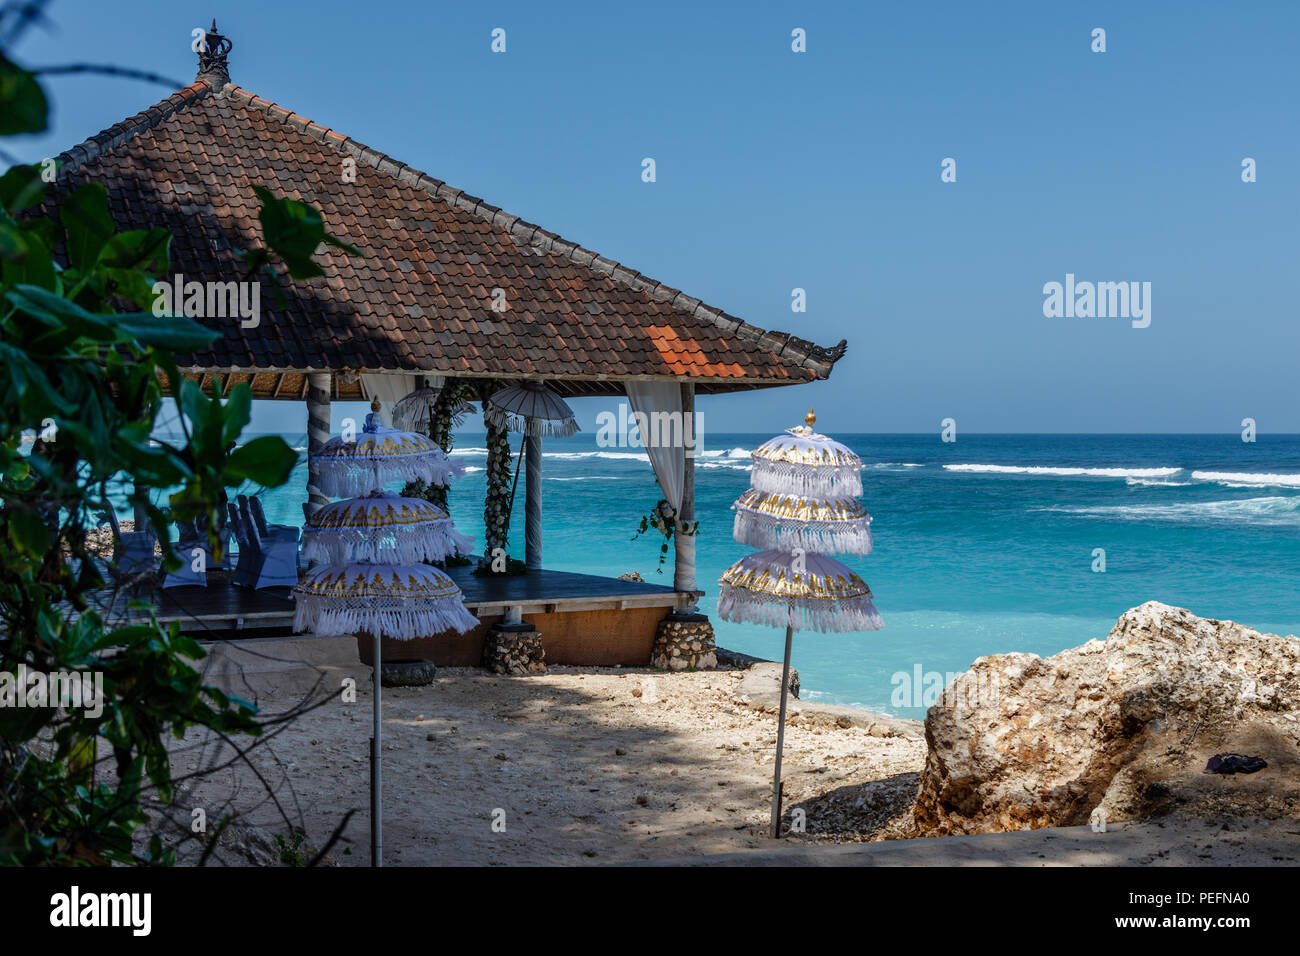 Ballenbildung (Pergola) am Strand nahe dem Meer, weiße Balinesischen Sonnenschirme. Bali, Indonesien Stockfoto